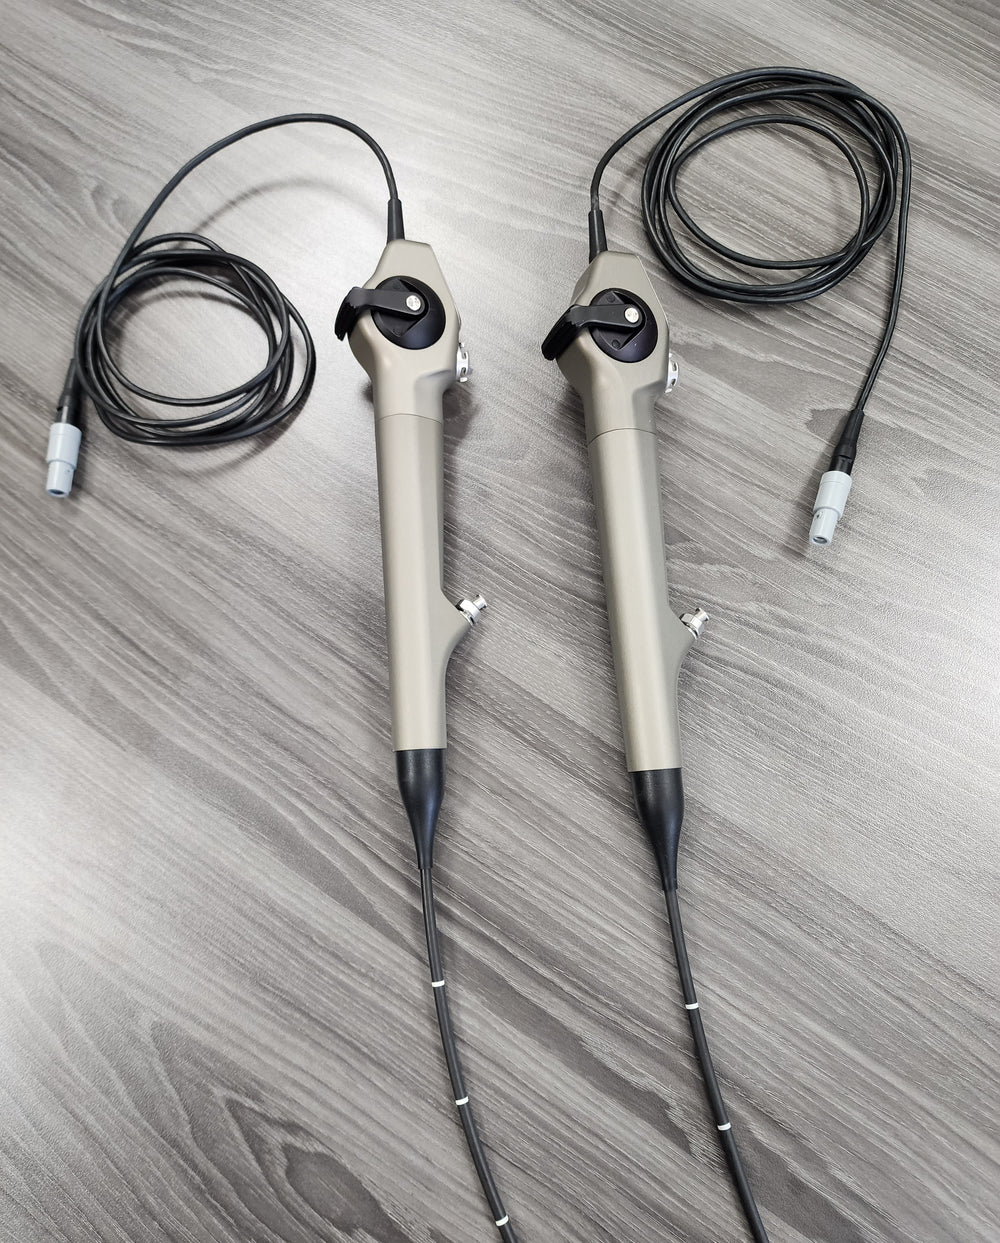 Karl Storz 11303 BNX Flexible Intubation Video Endoscope